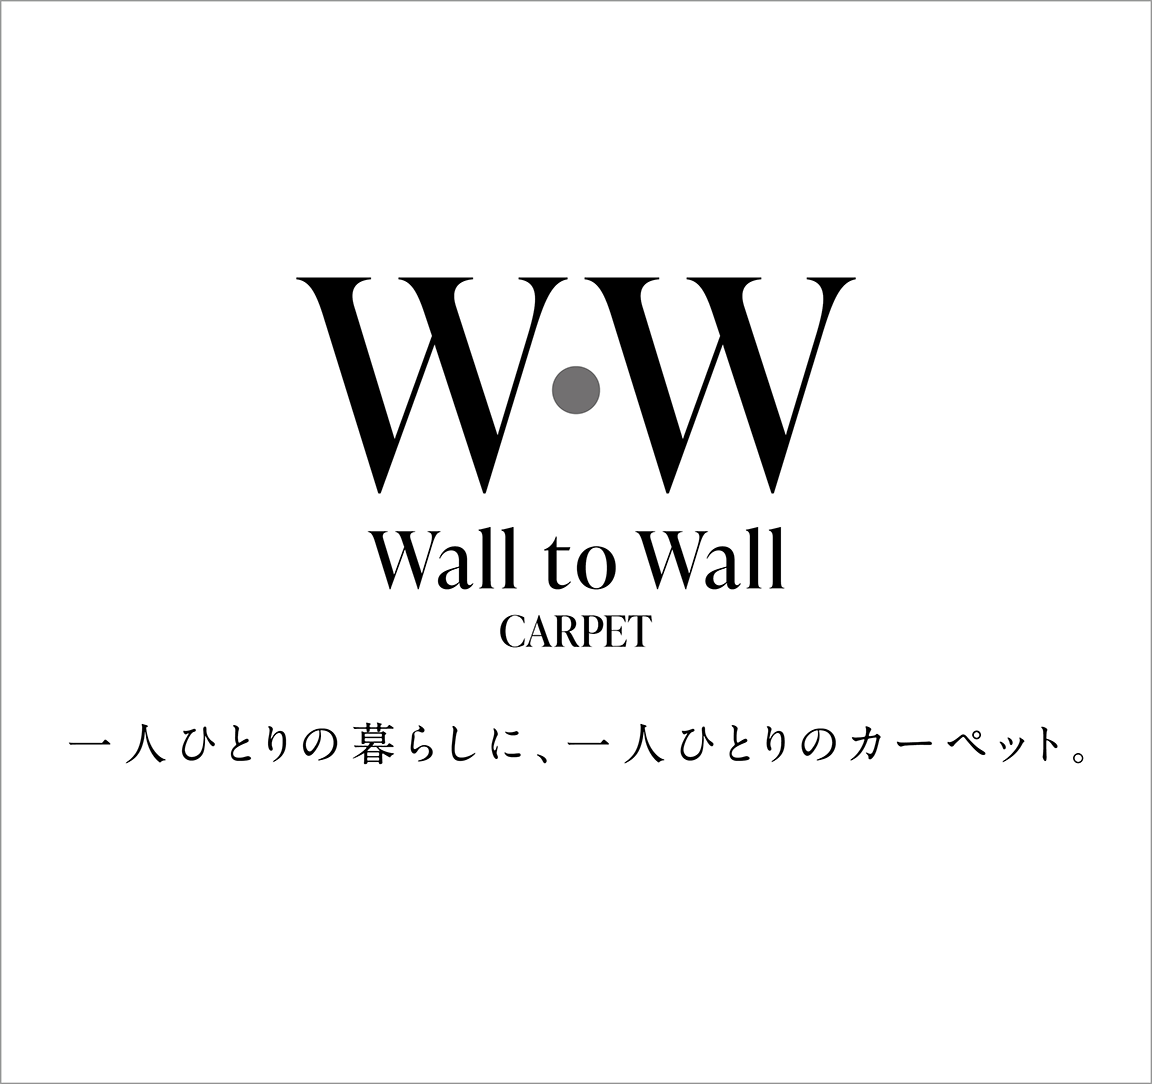 Wall to Wallカーペット - アスワン株式会社